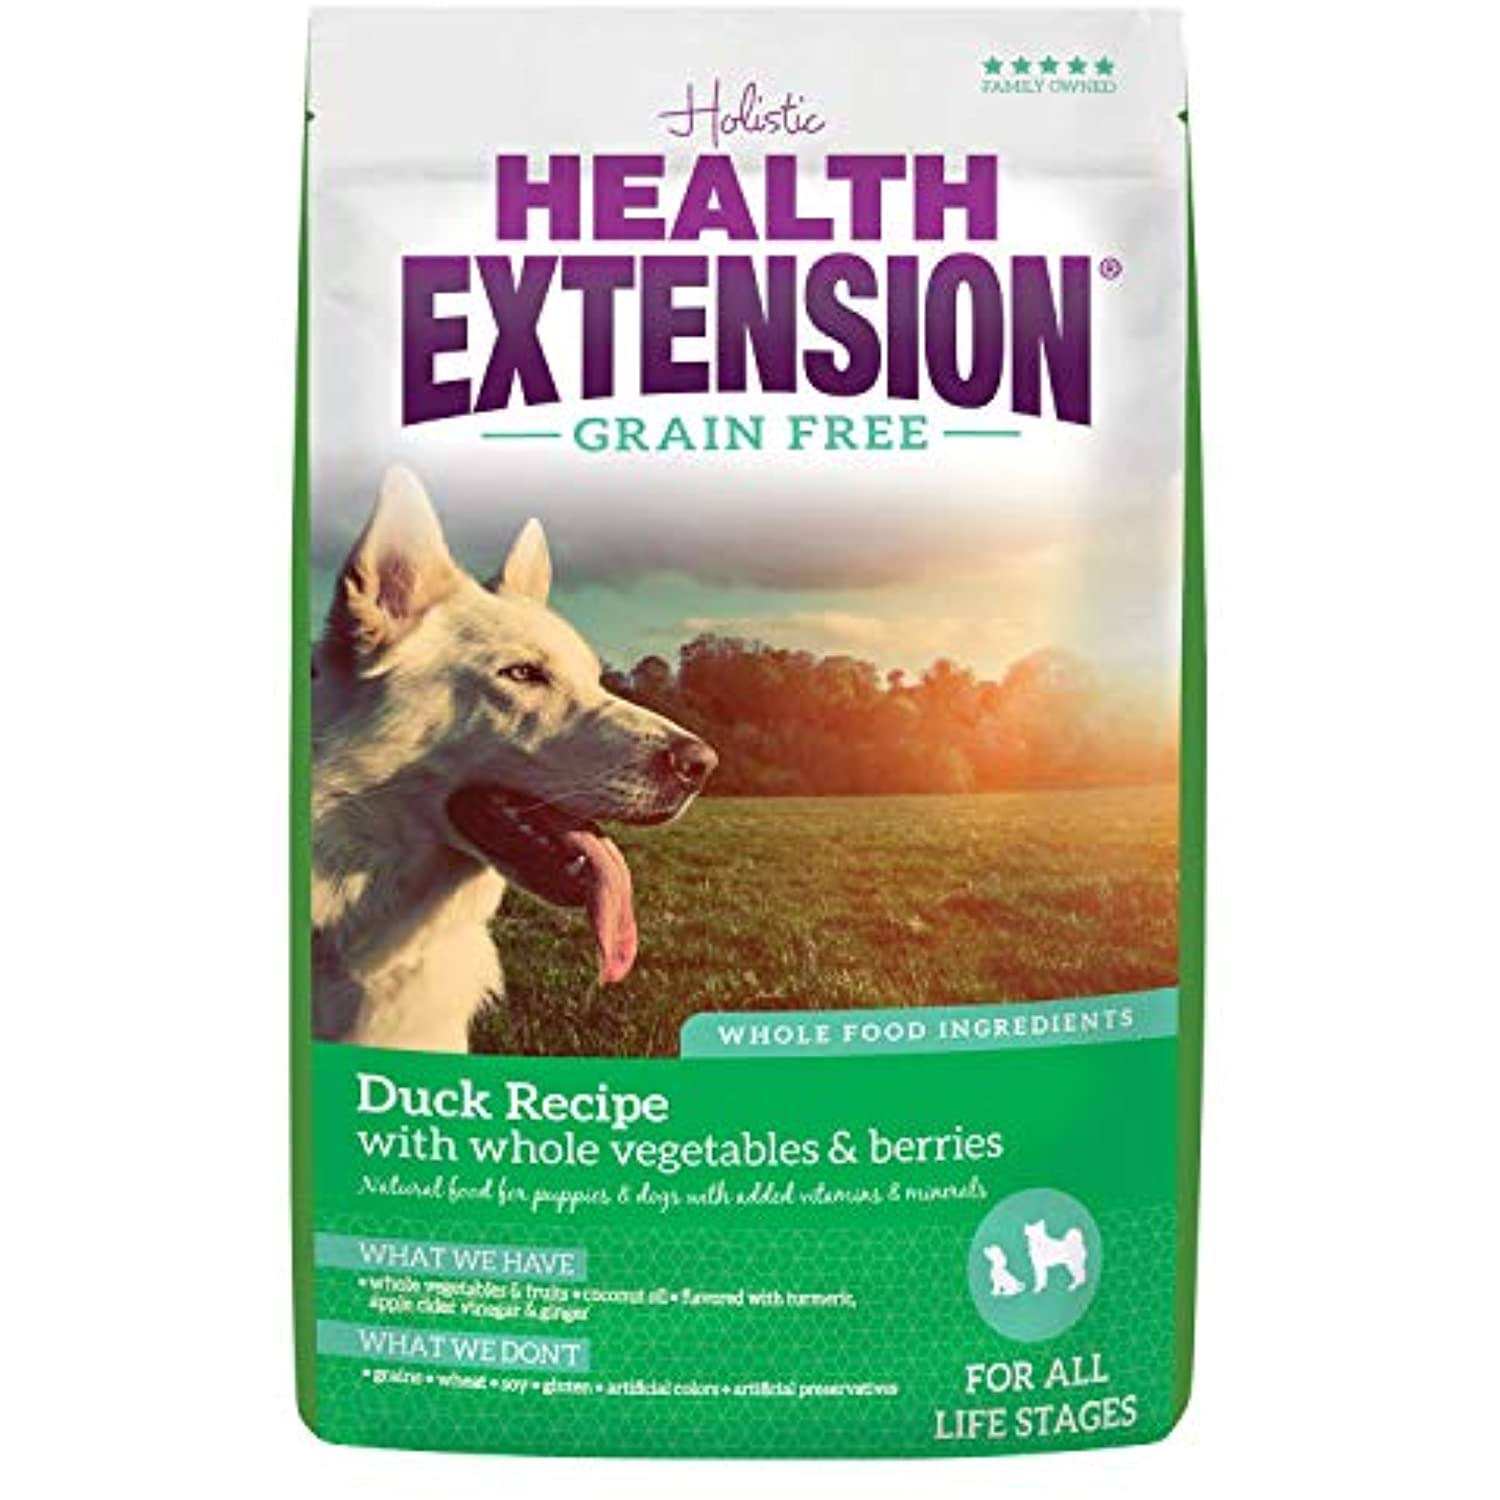 Health Extension Grain-Free Duck Recipe Dog Food - 23.5lb